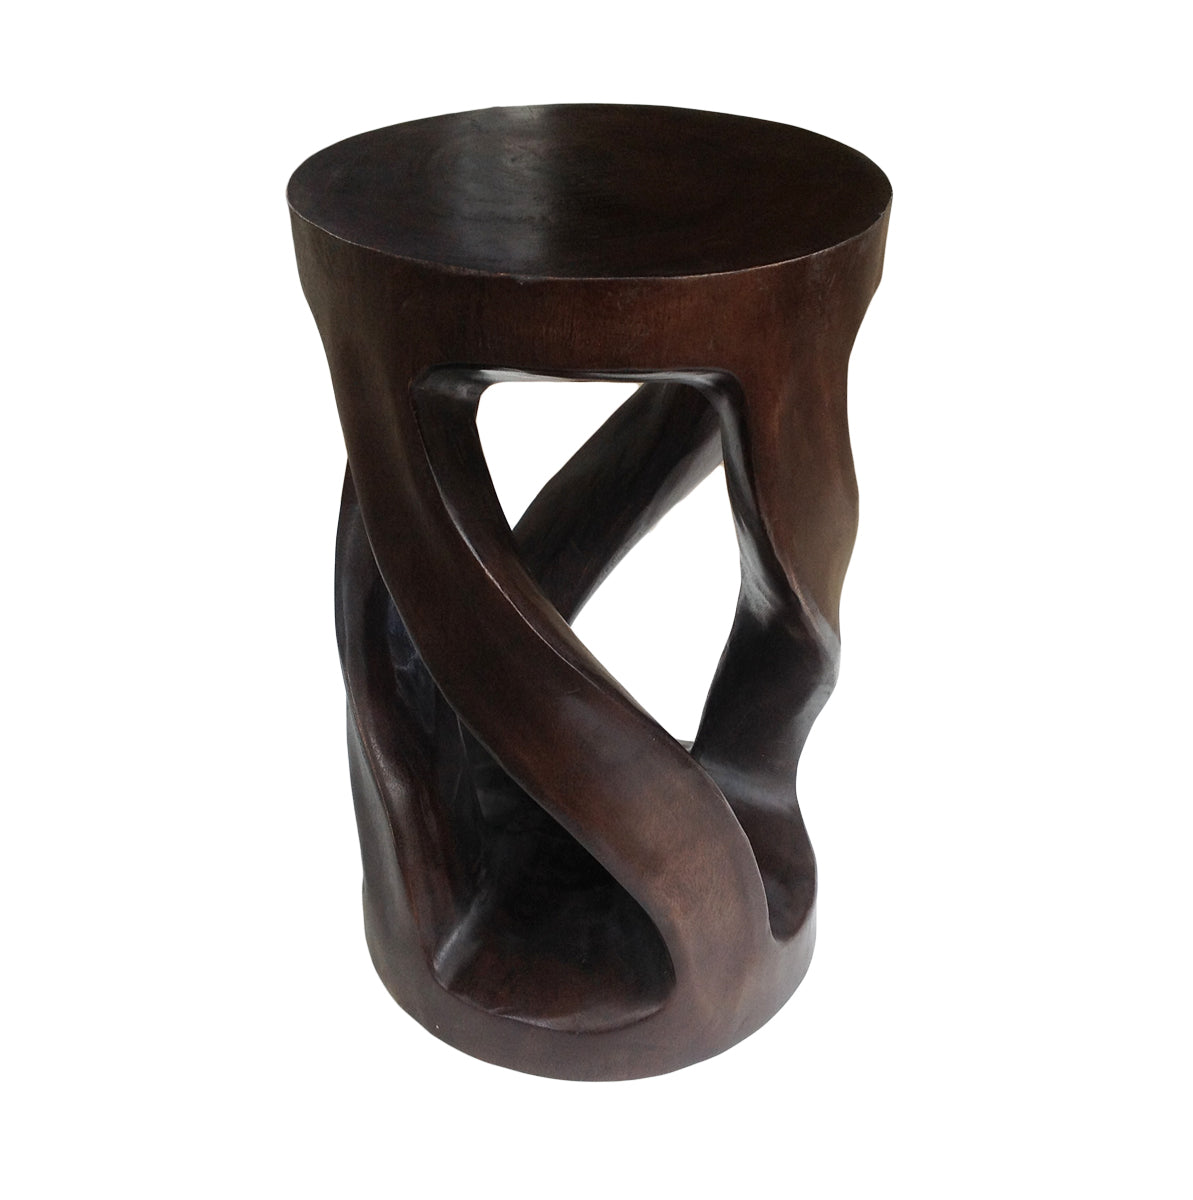 Wood Side Table - Round Top Stool - Vine Twist 20 inch - Dark Brown